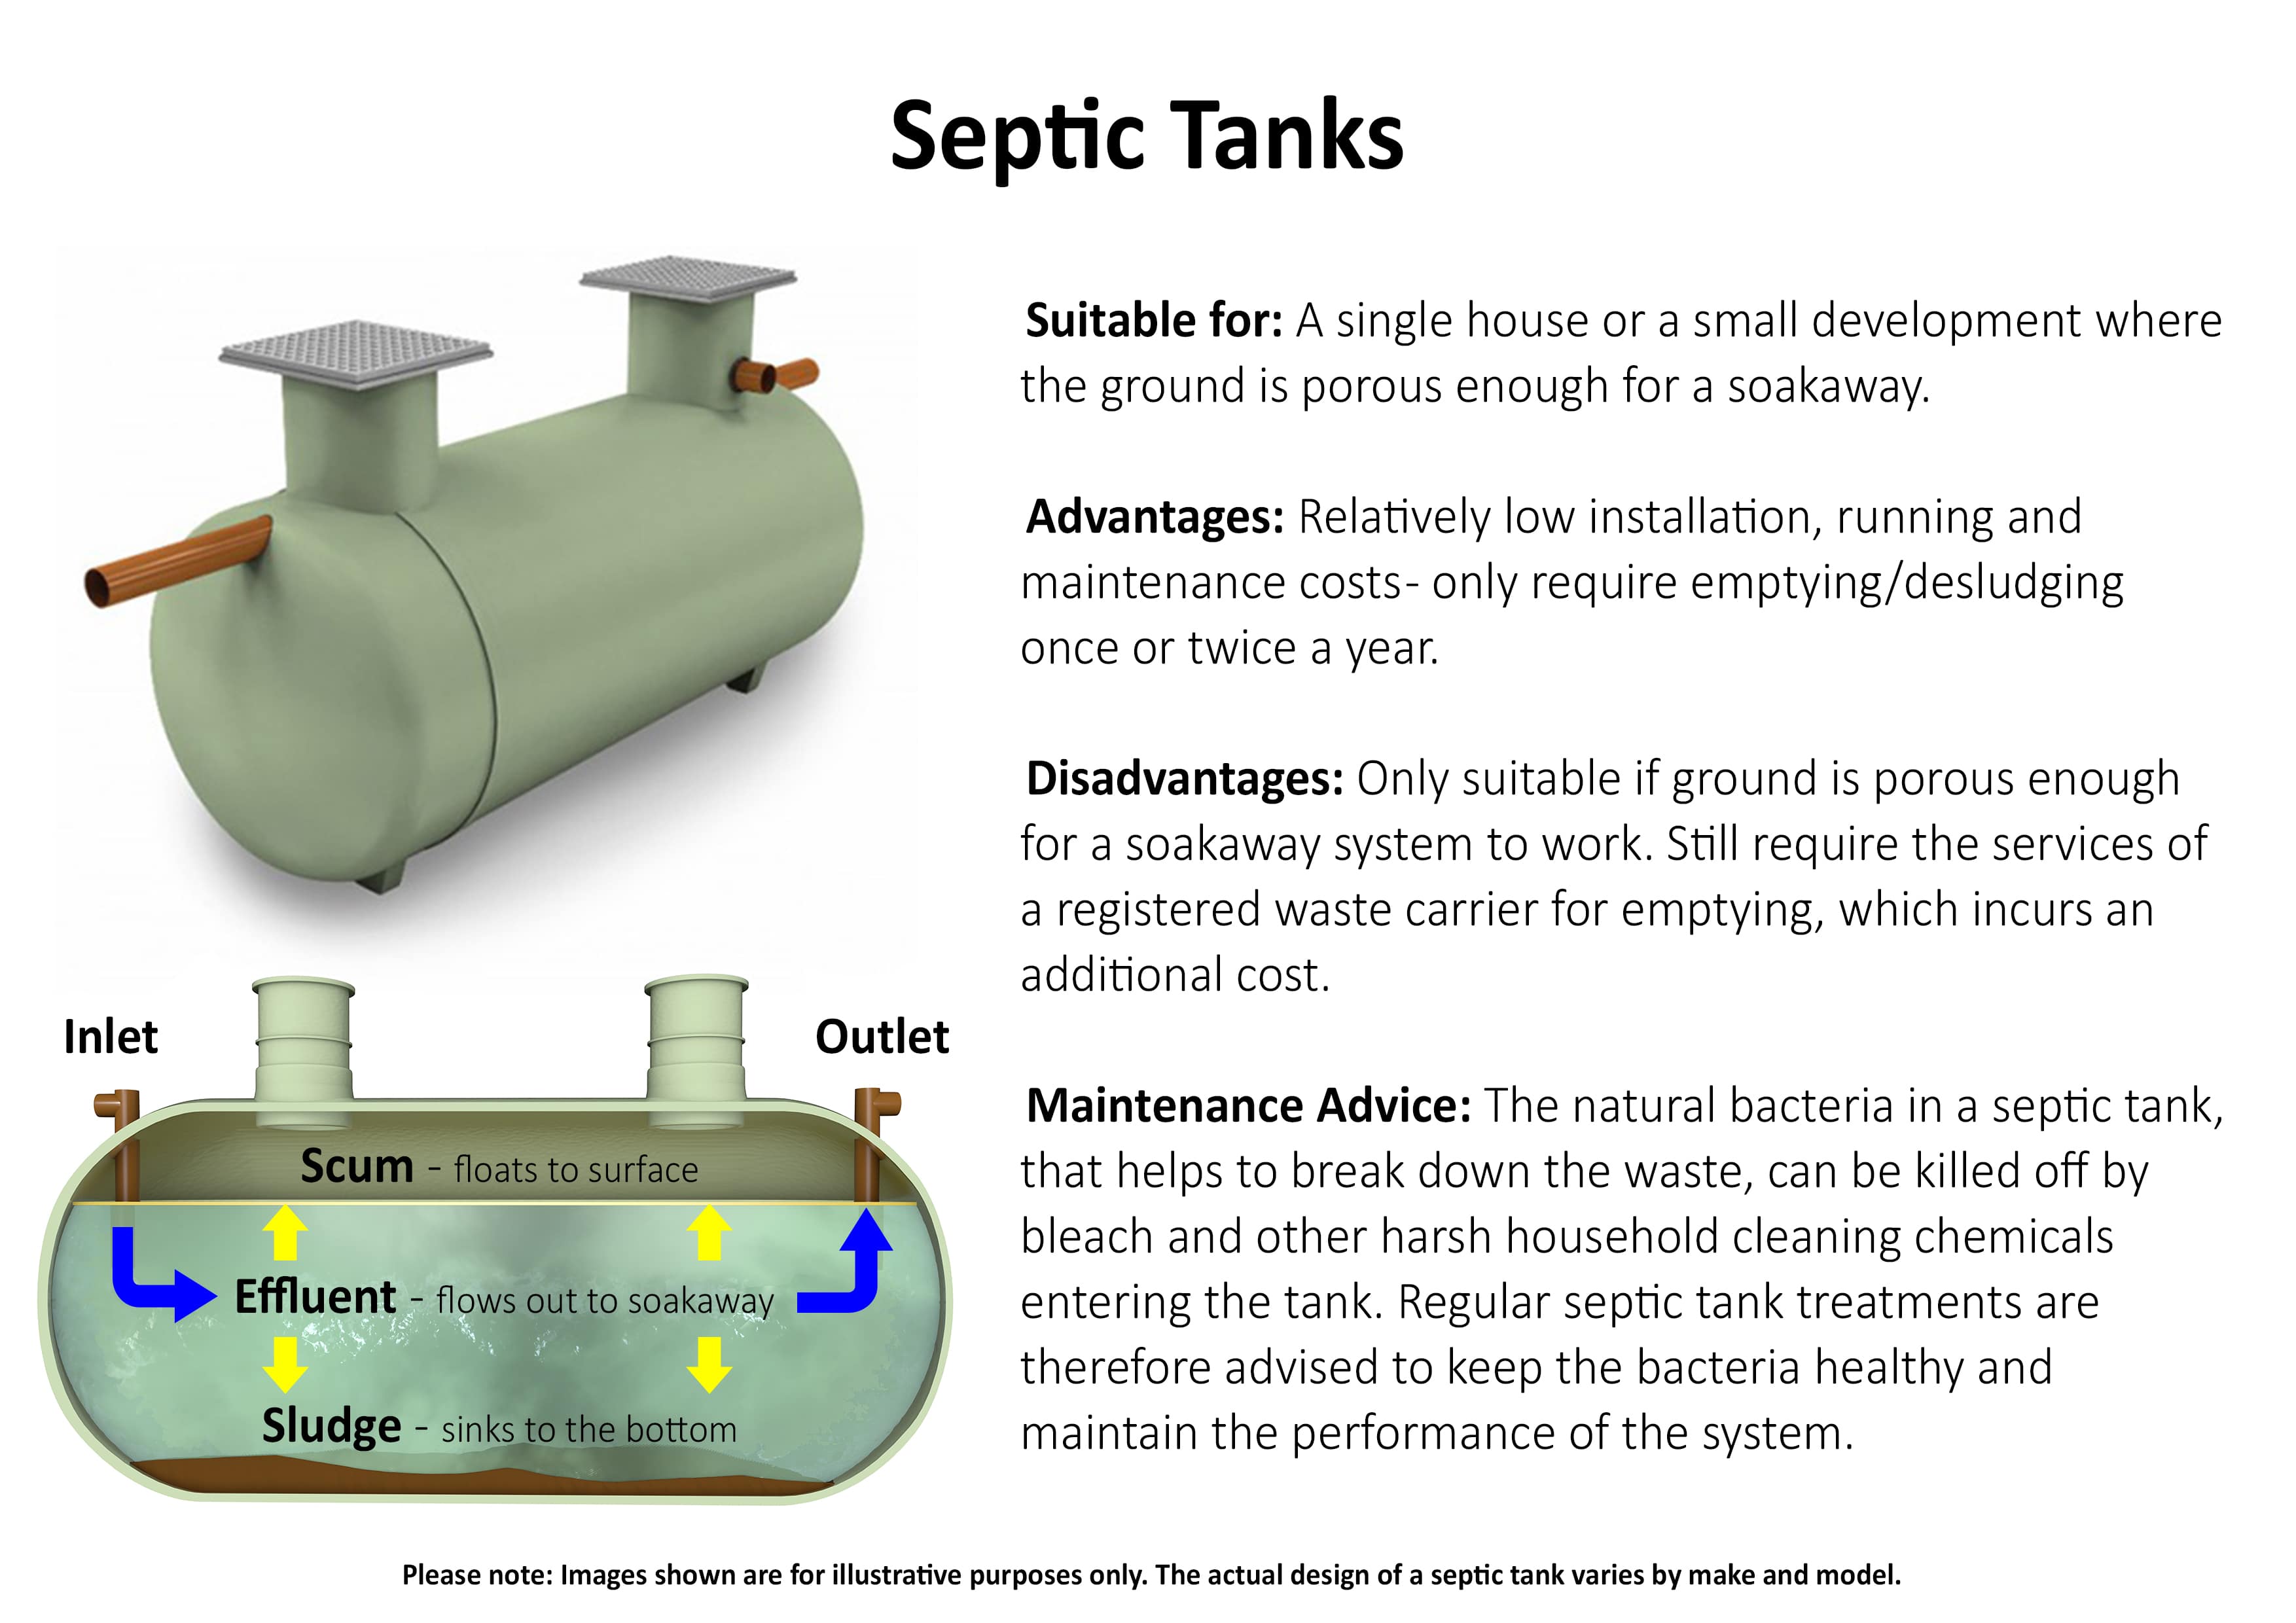 Do I need a Septic Tank or Sewage Treatment Plant?